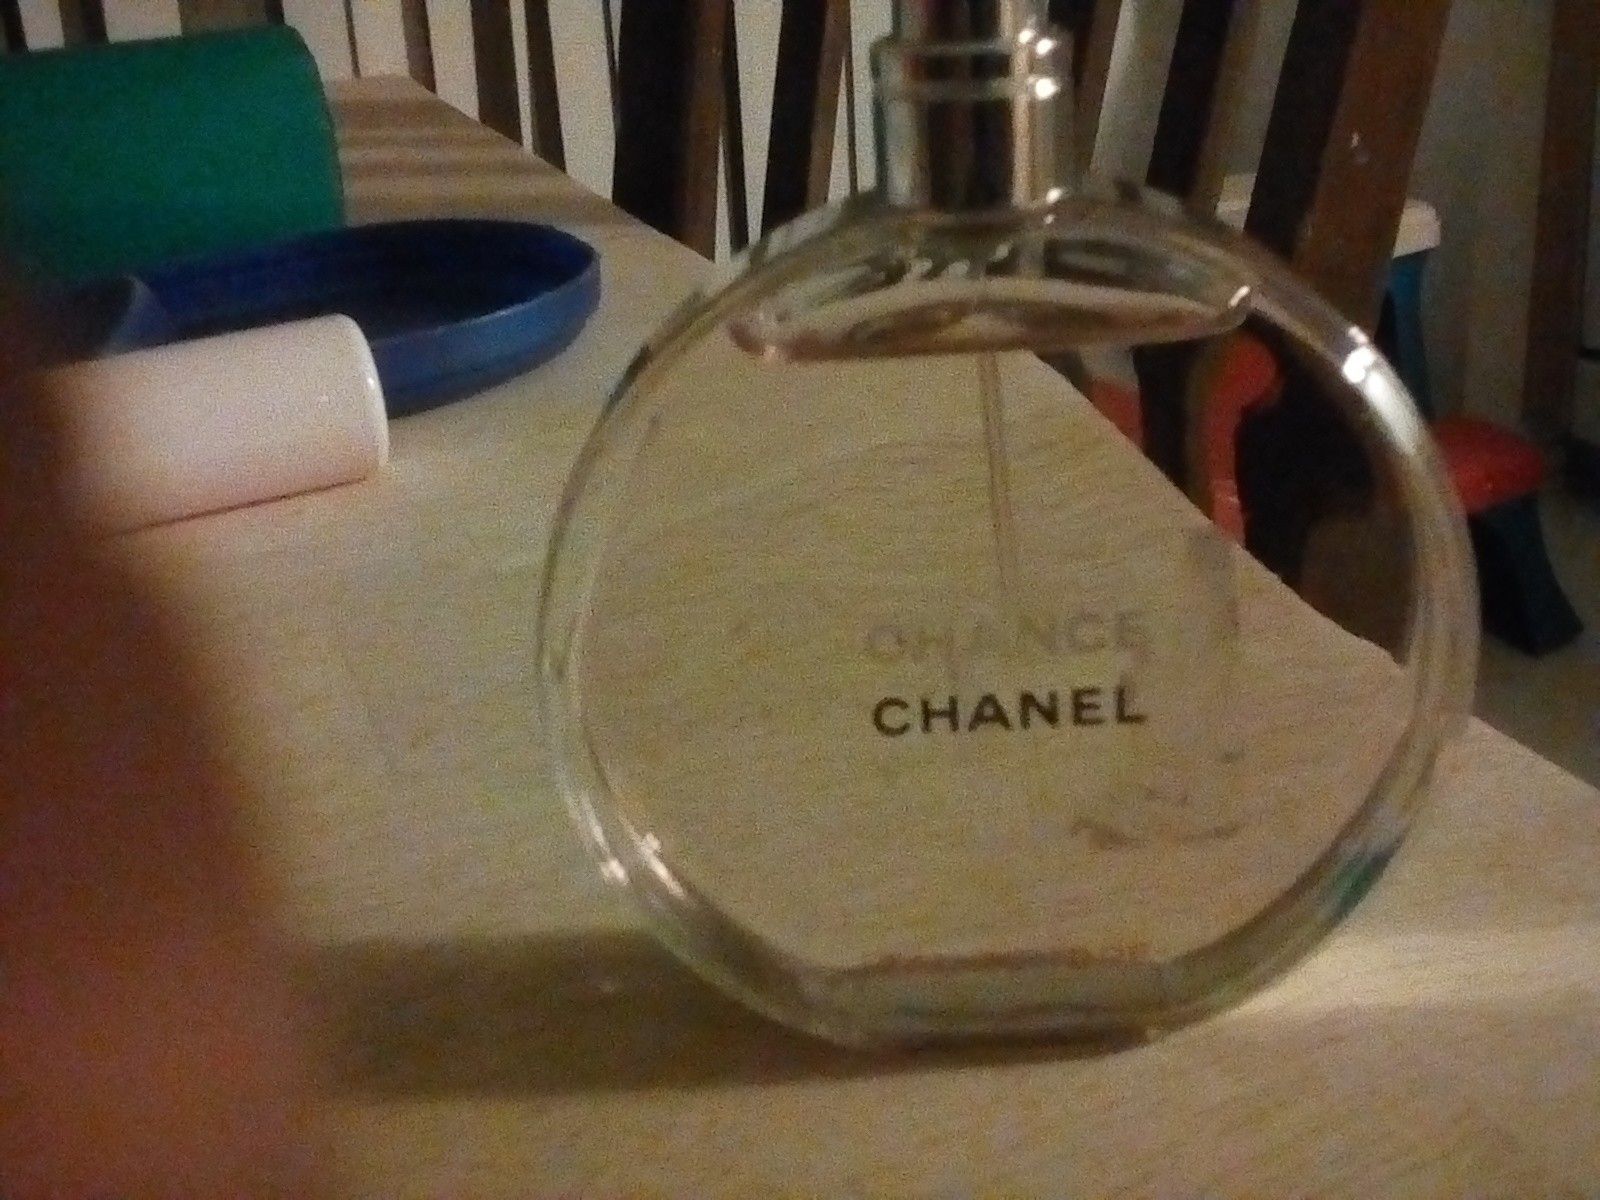 Coco Chanel "chance" women's perfume